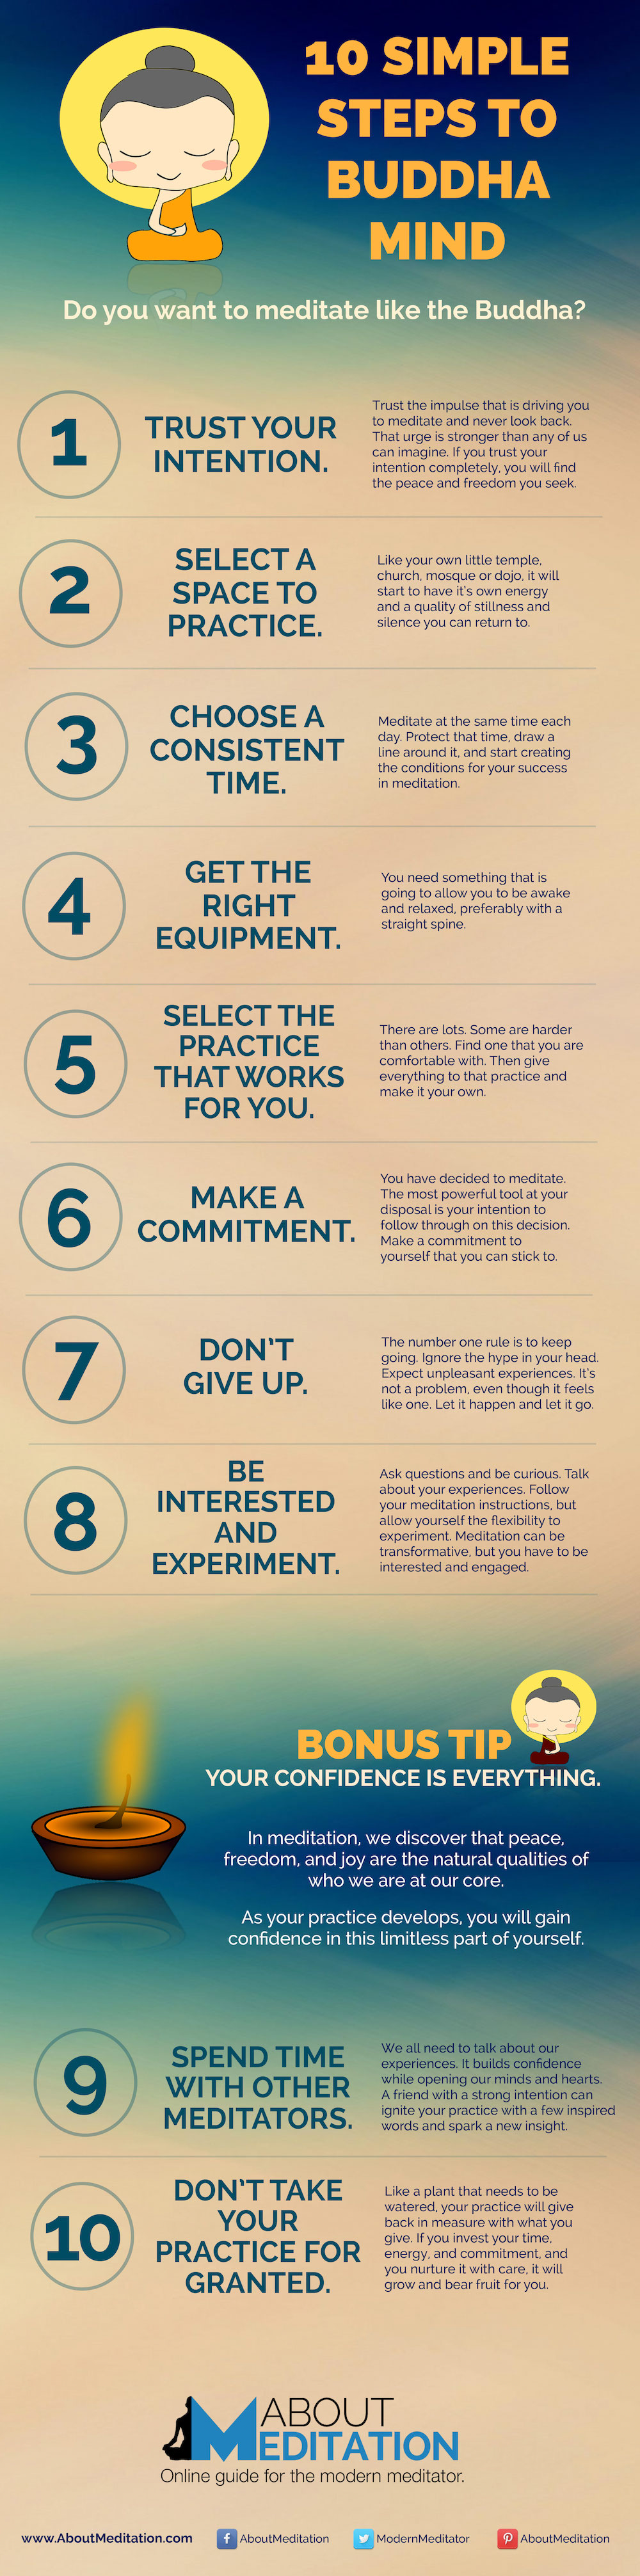 10 STEPS TO BUDDHA MIND